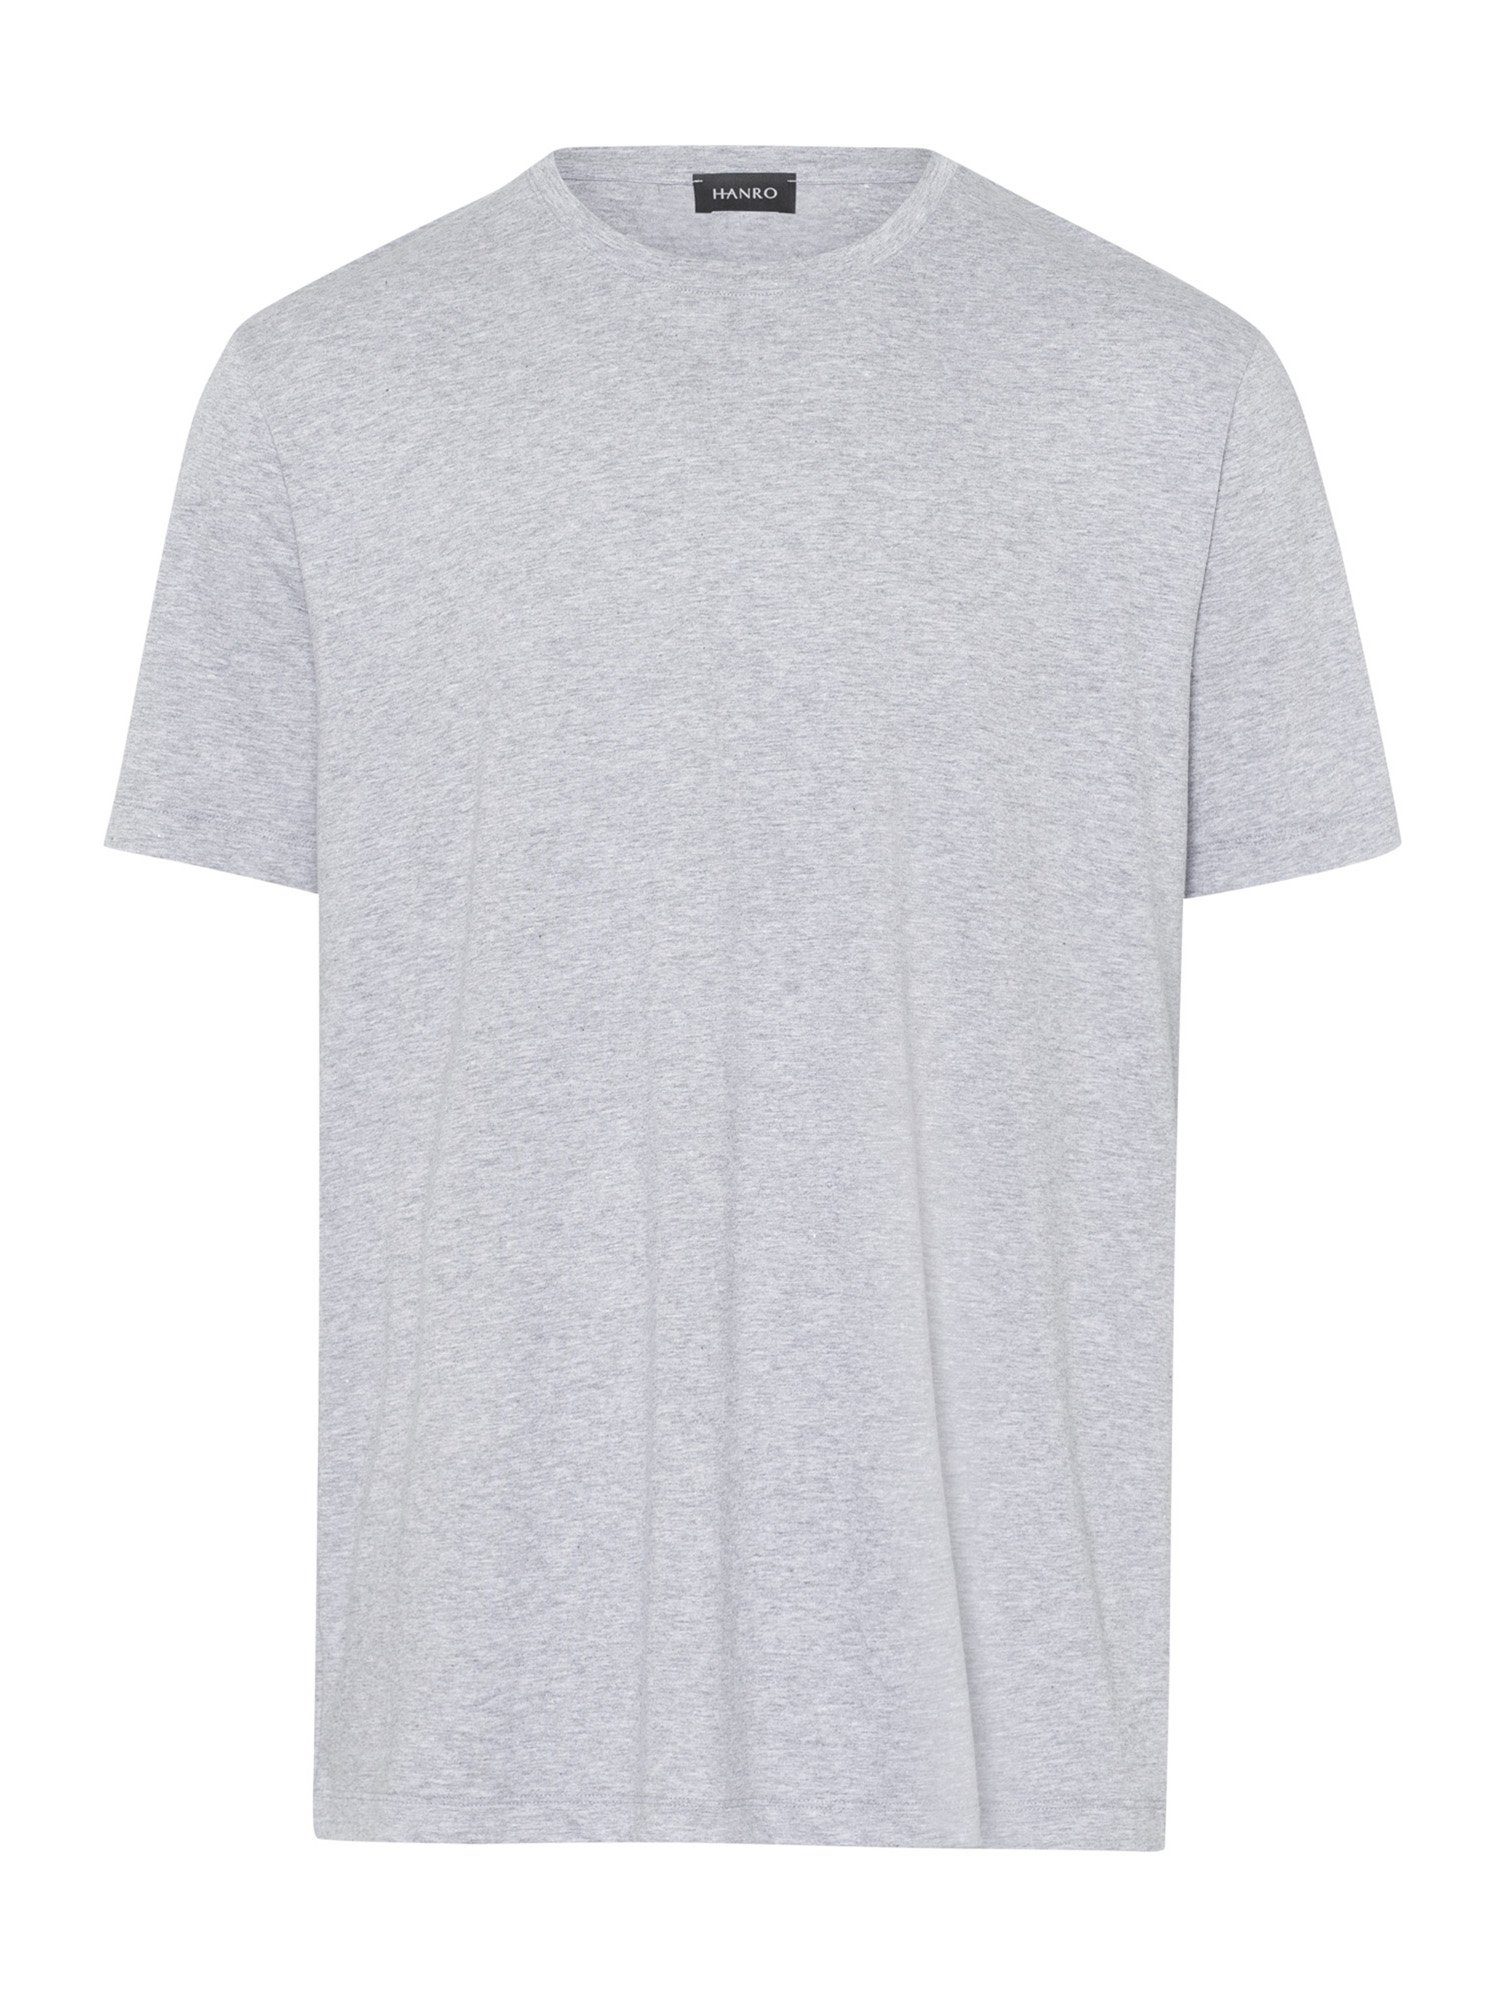 Hanro T-Shirt silver & Day Night melange